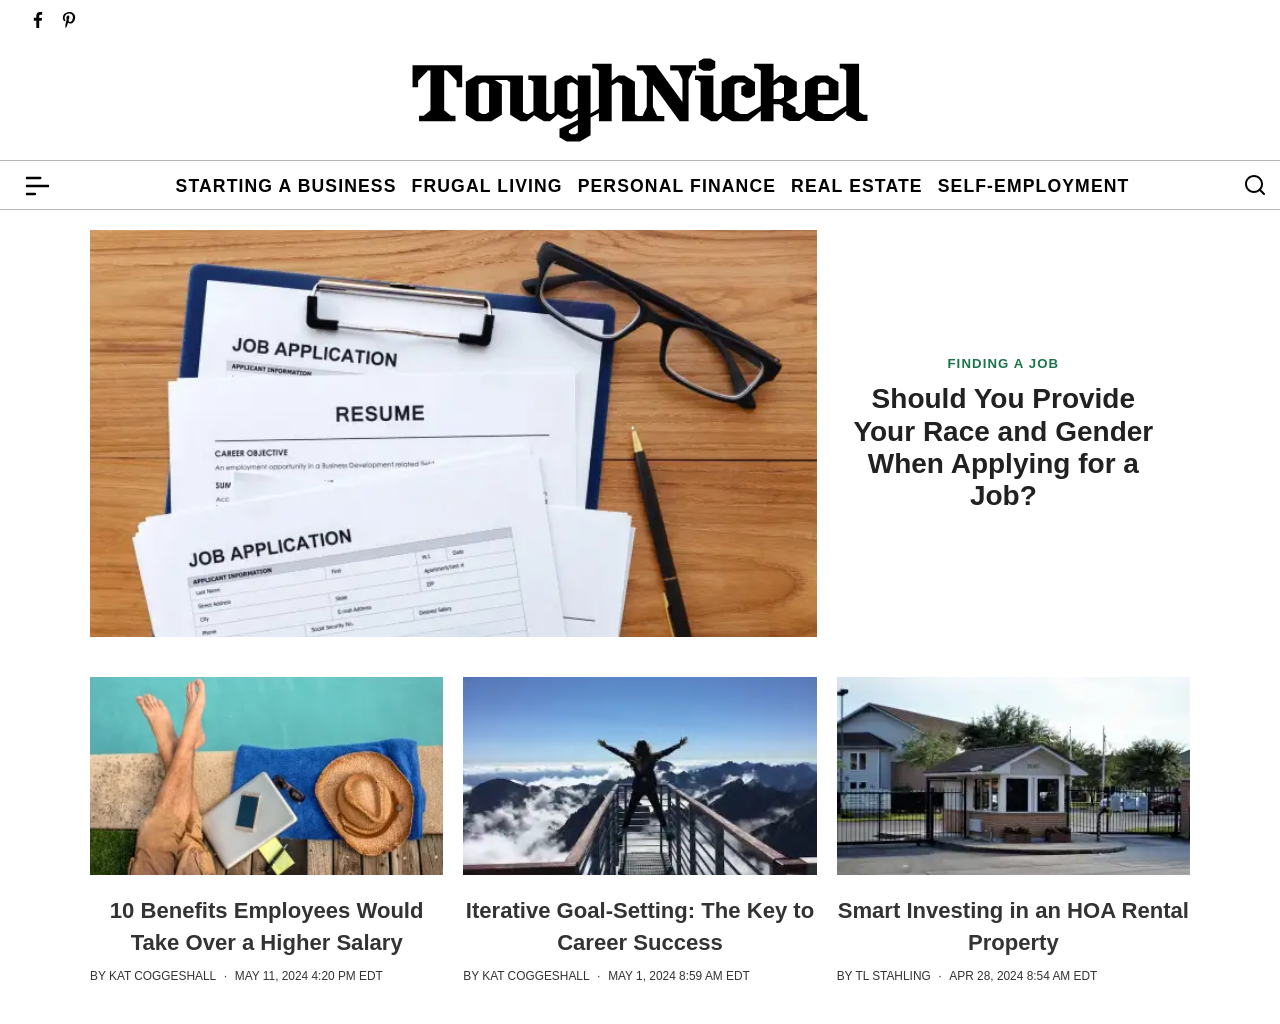 toughnickel.com